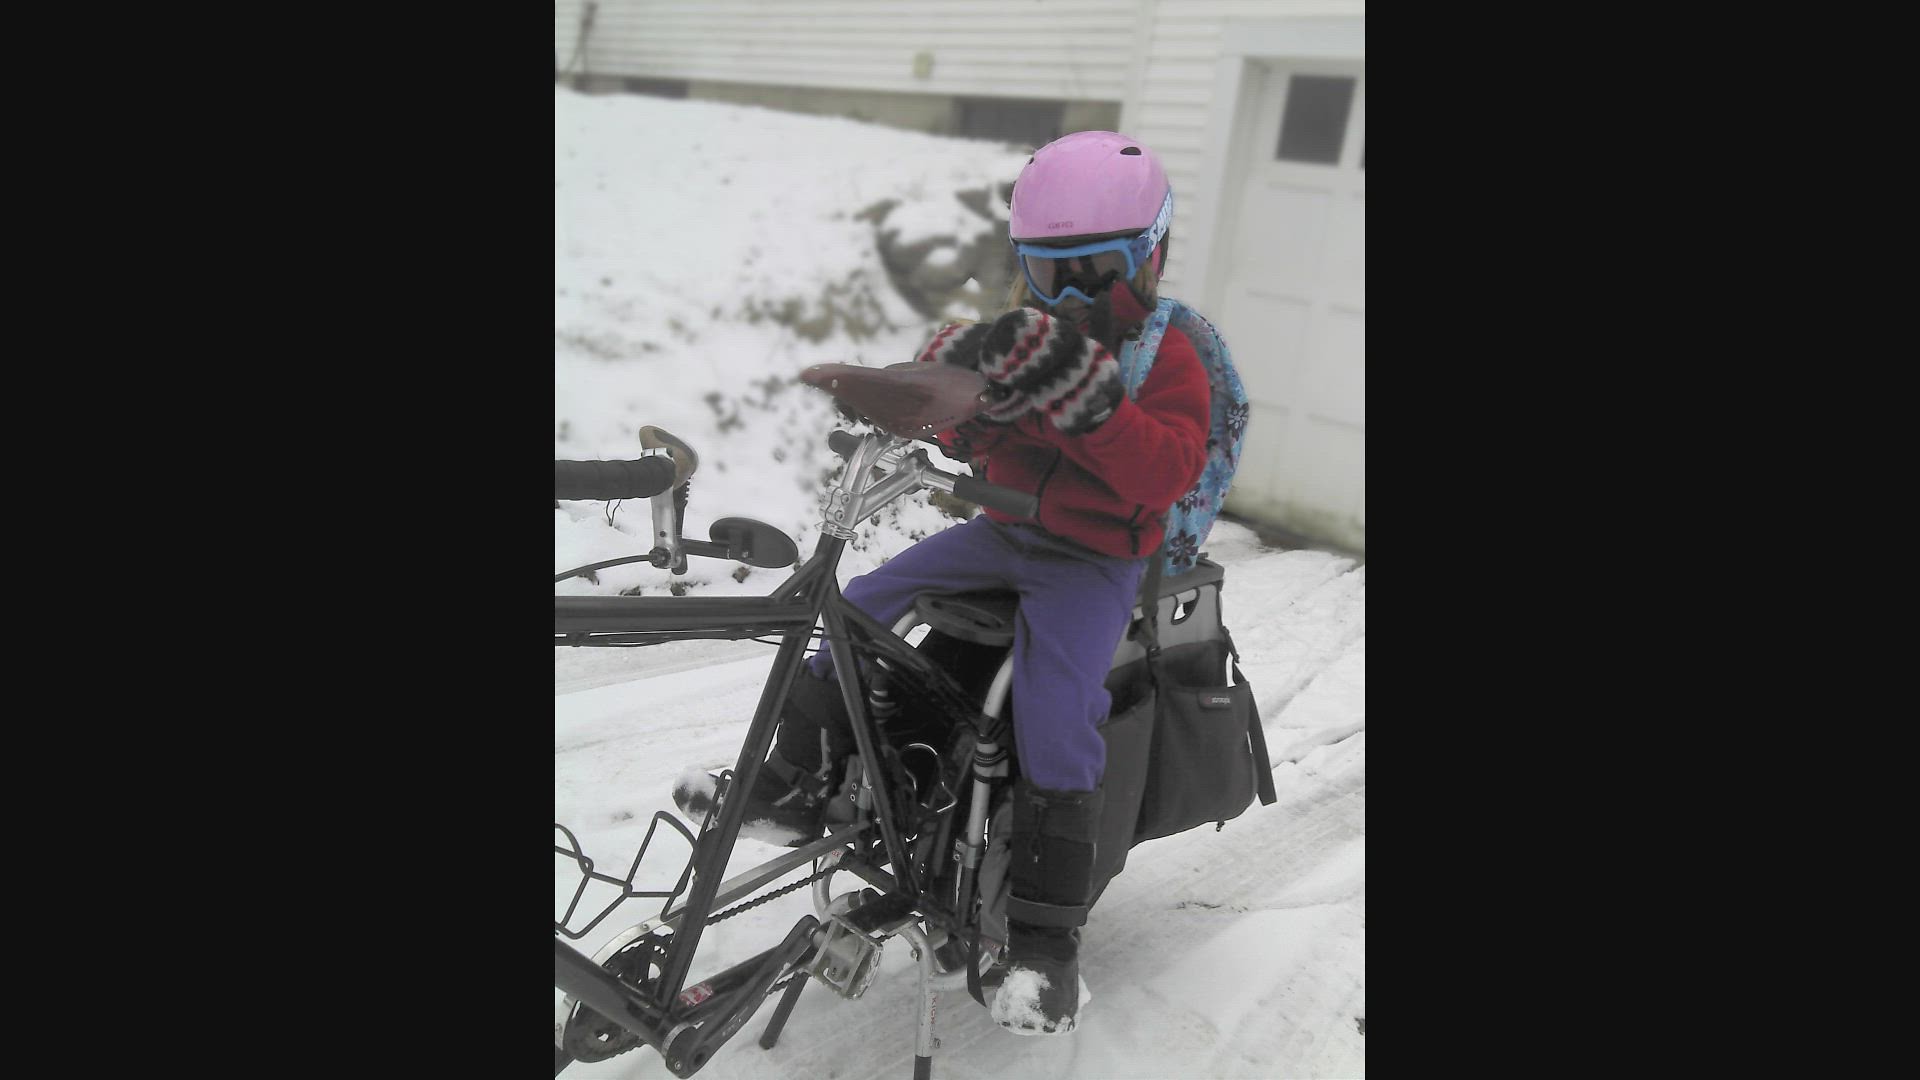 Winter bike commuting with kids